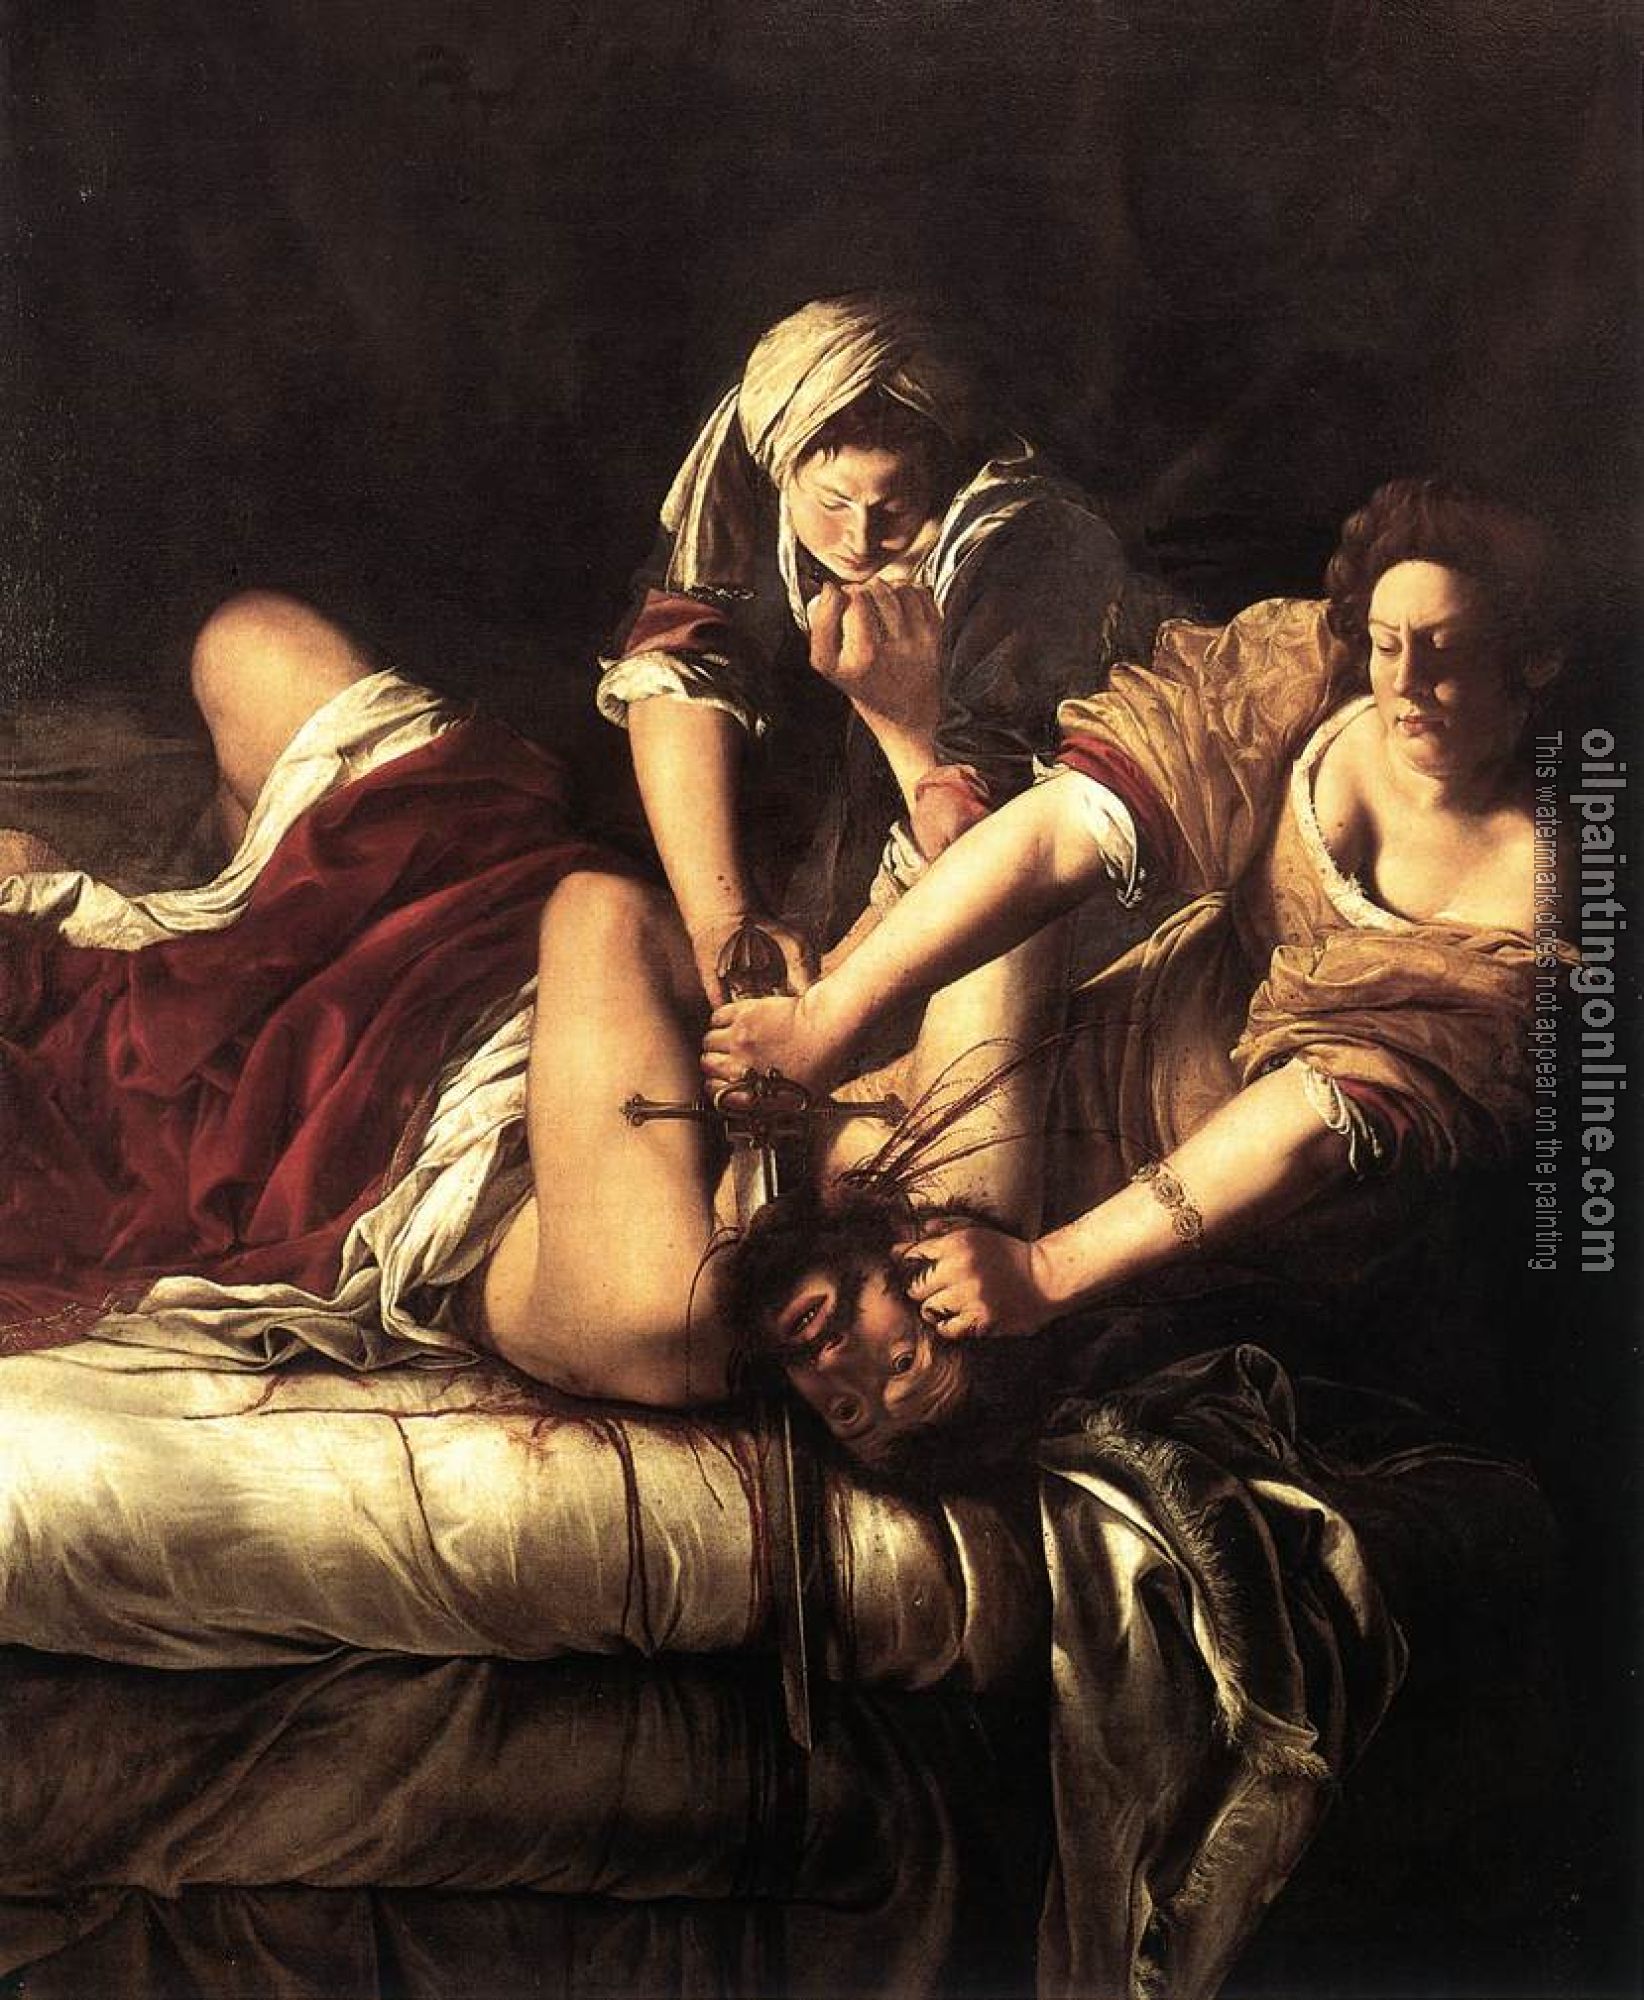 Gentileschi, Artemisia - Judith Beheading Holofernes